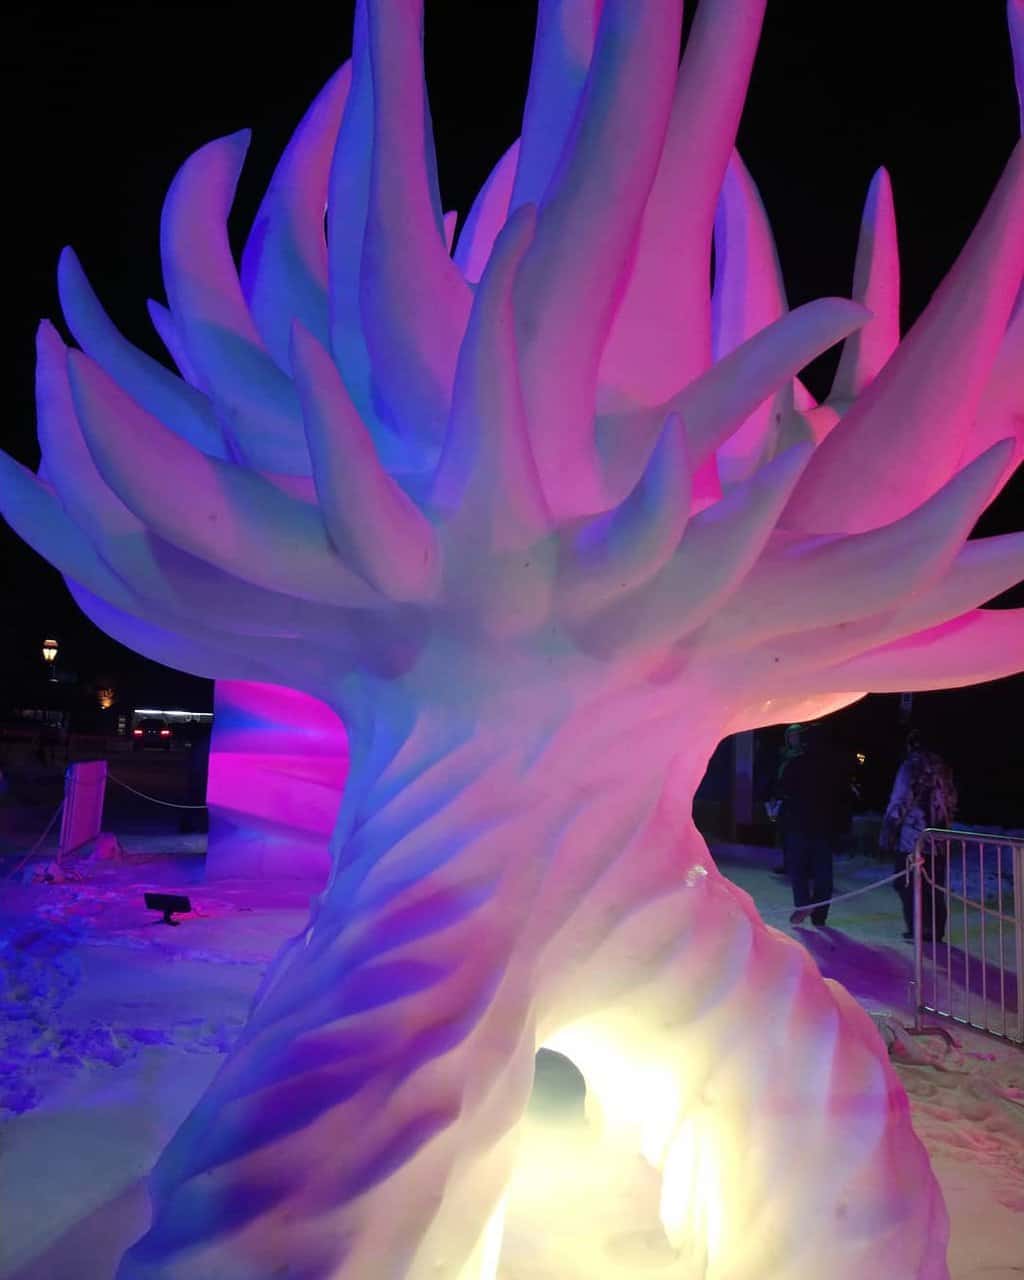 An underwater plant shape snow sculpture